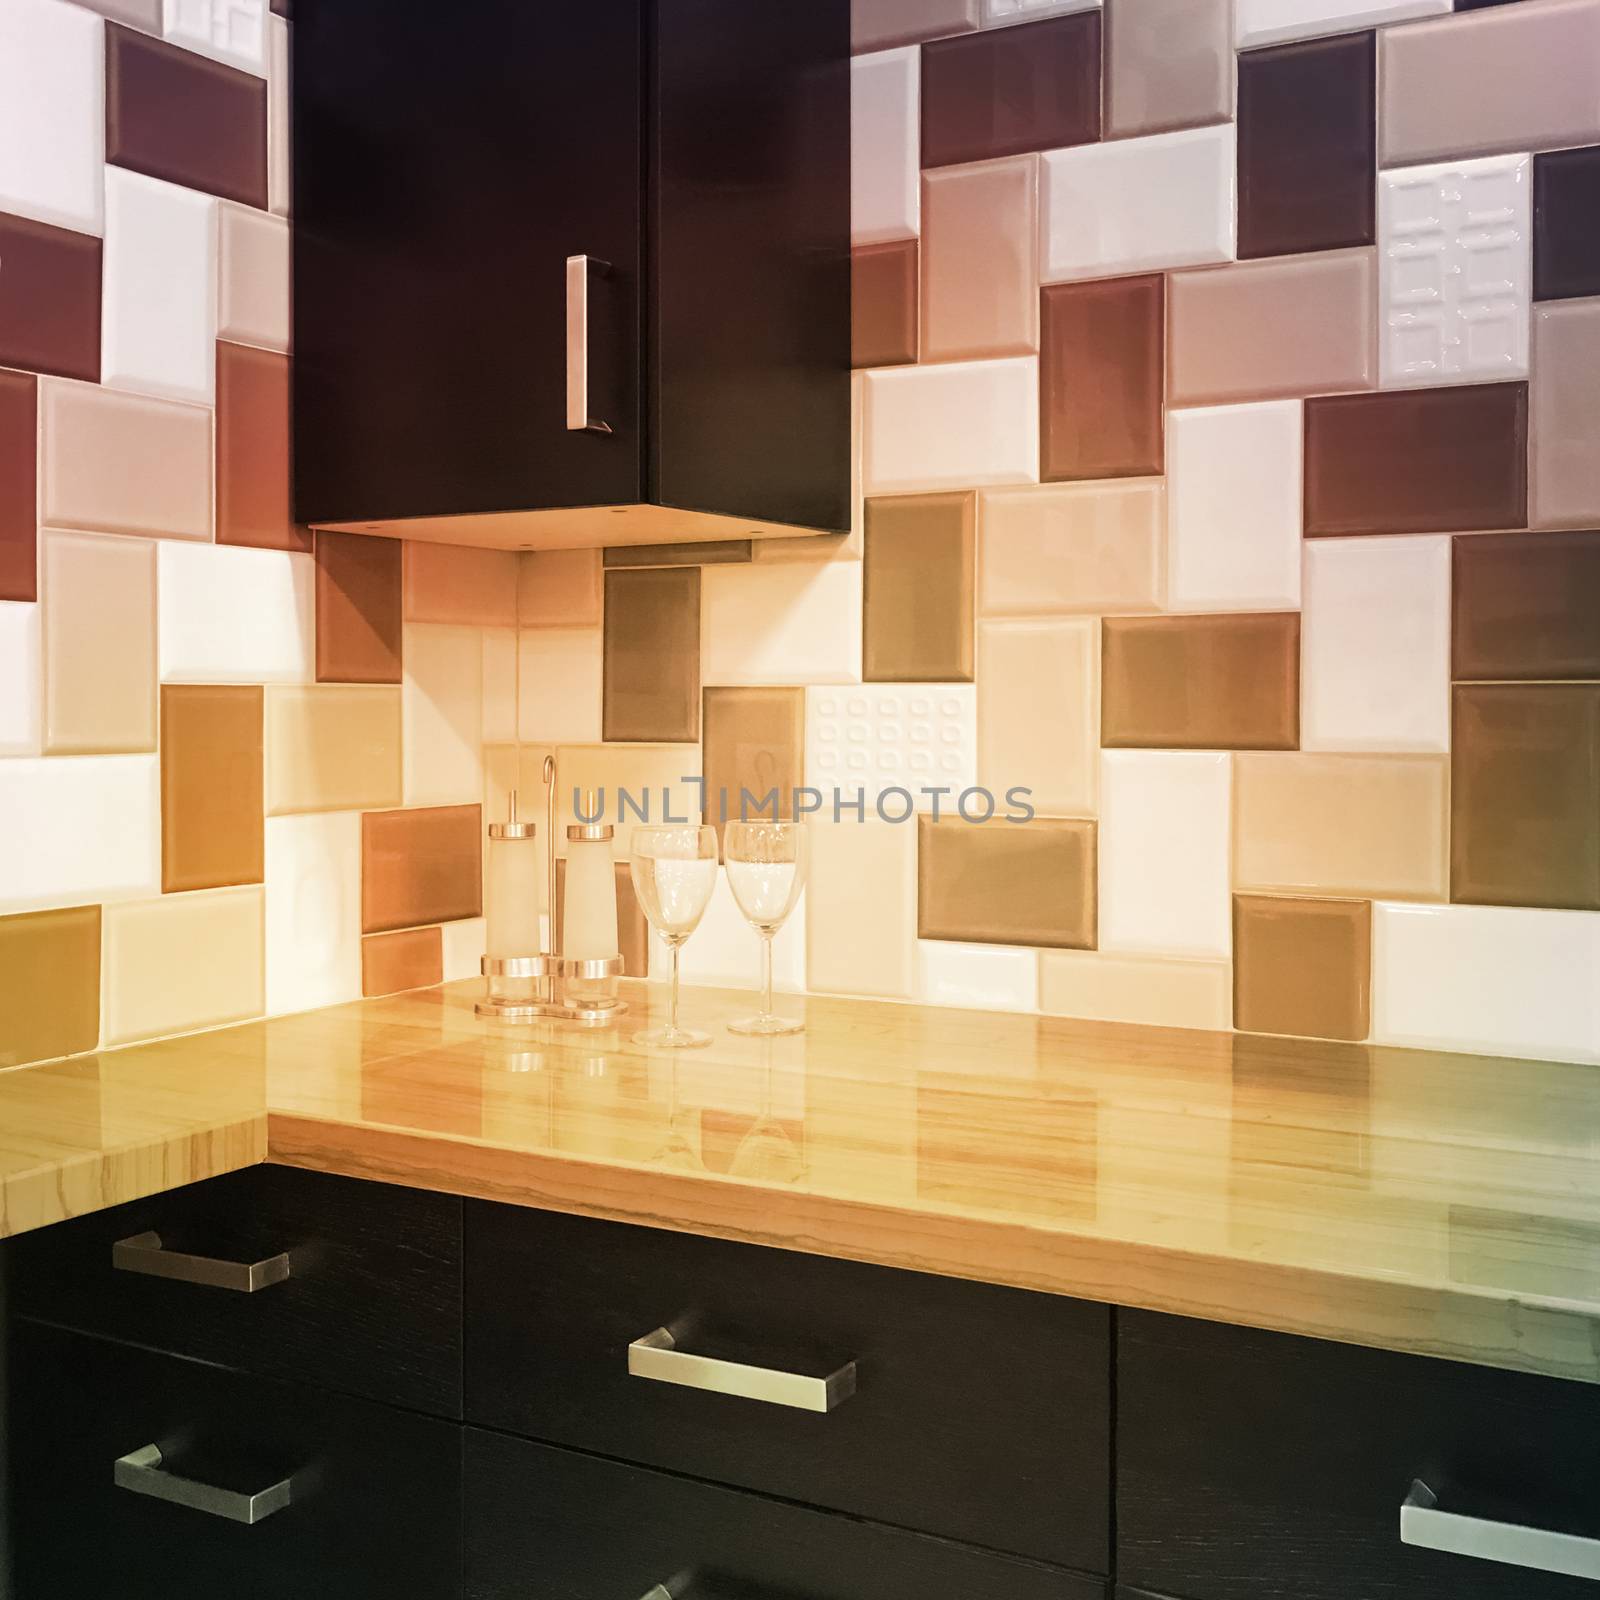 Modern kitchen cabinets and tiled backsplash in warm colors.